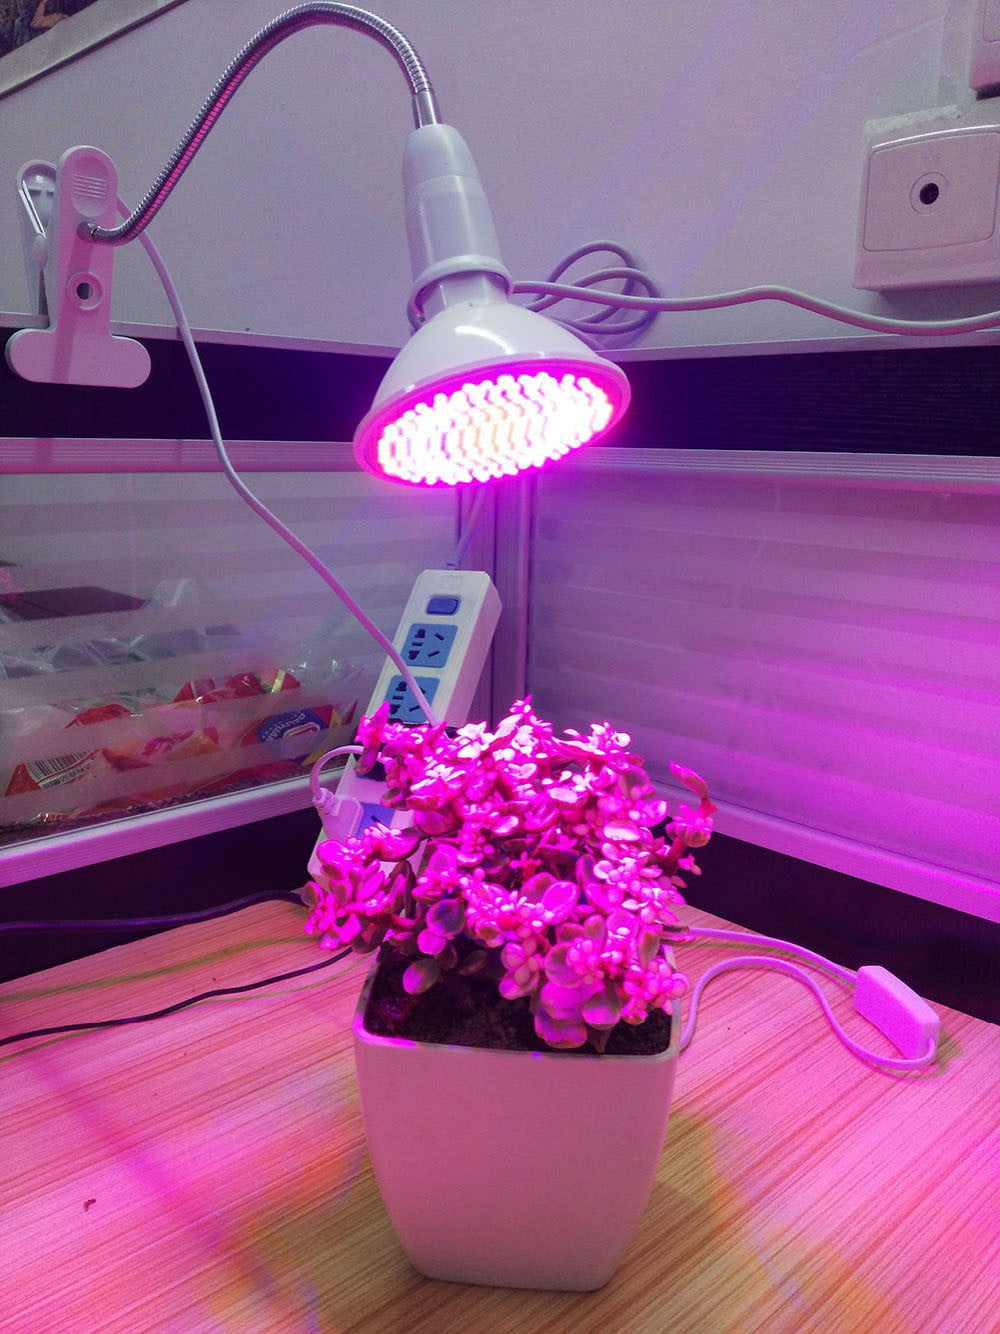 4X 200LED E27 Plant Grow Light lamp flower seeds Growing Lights Bulbs Hydroponic 